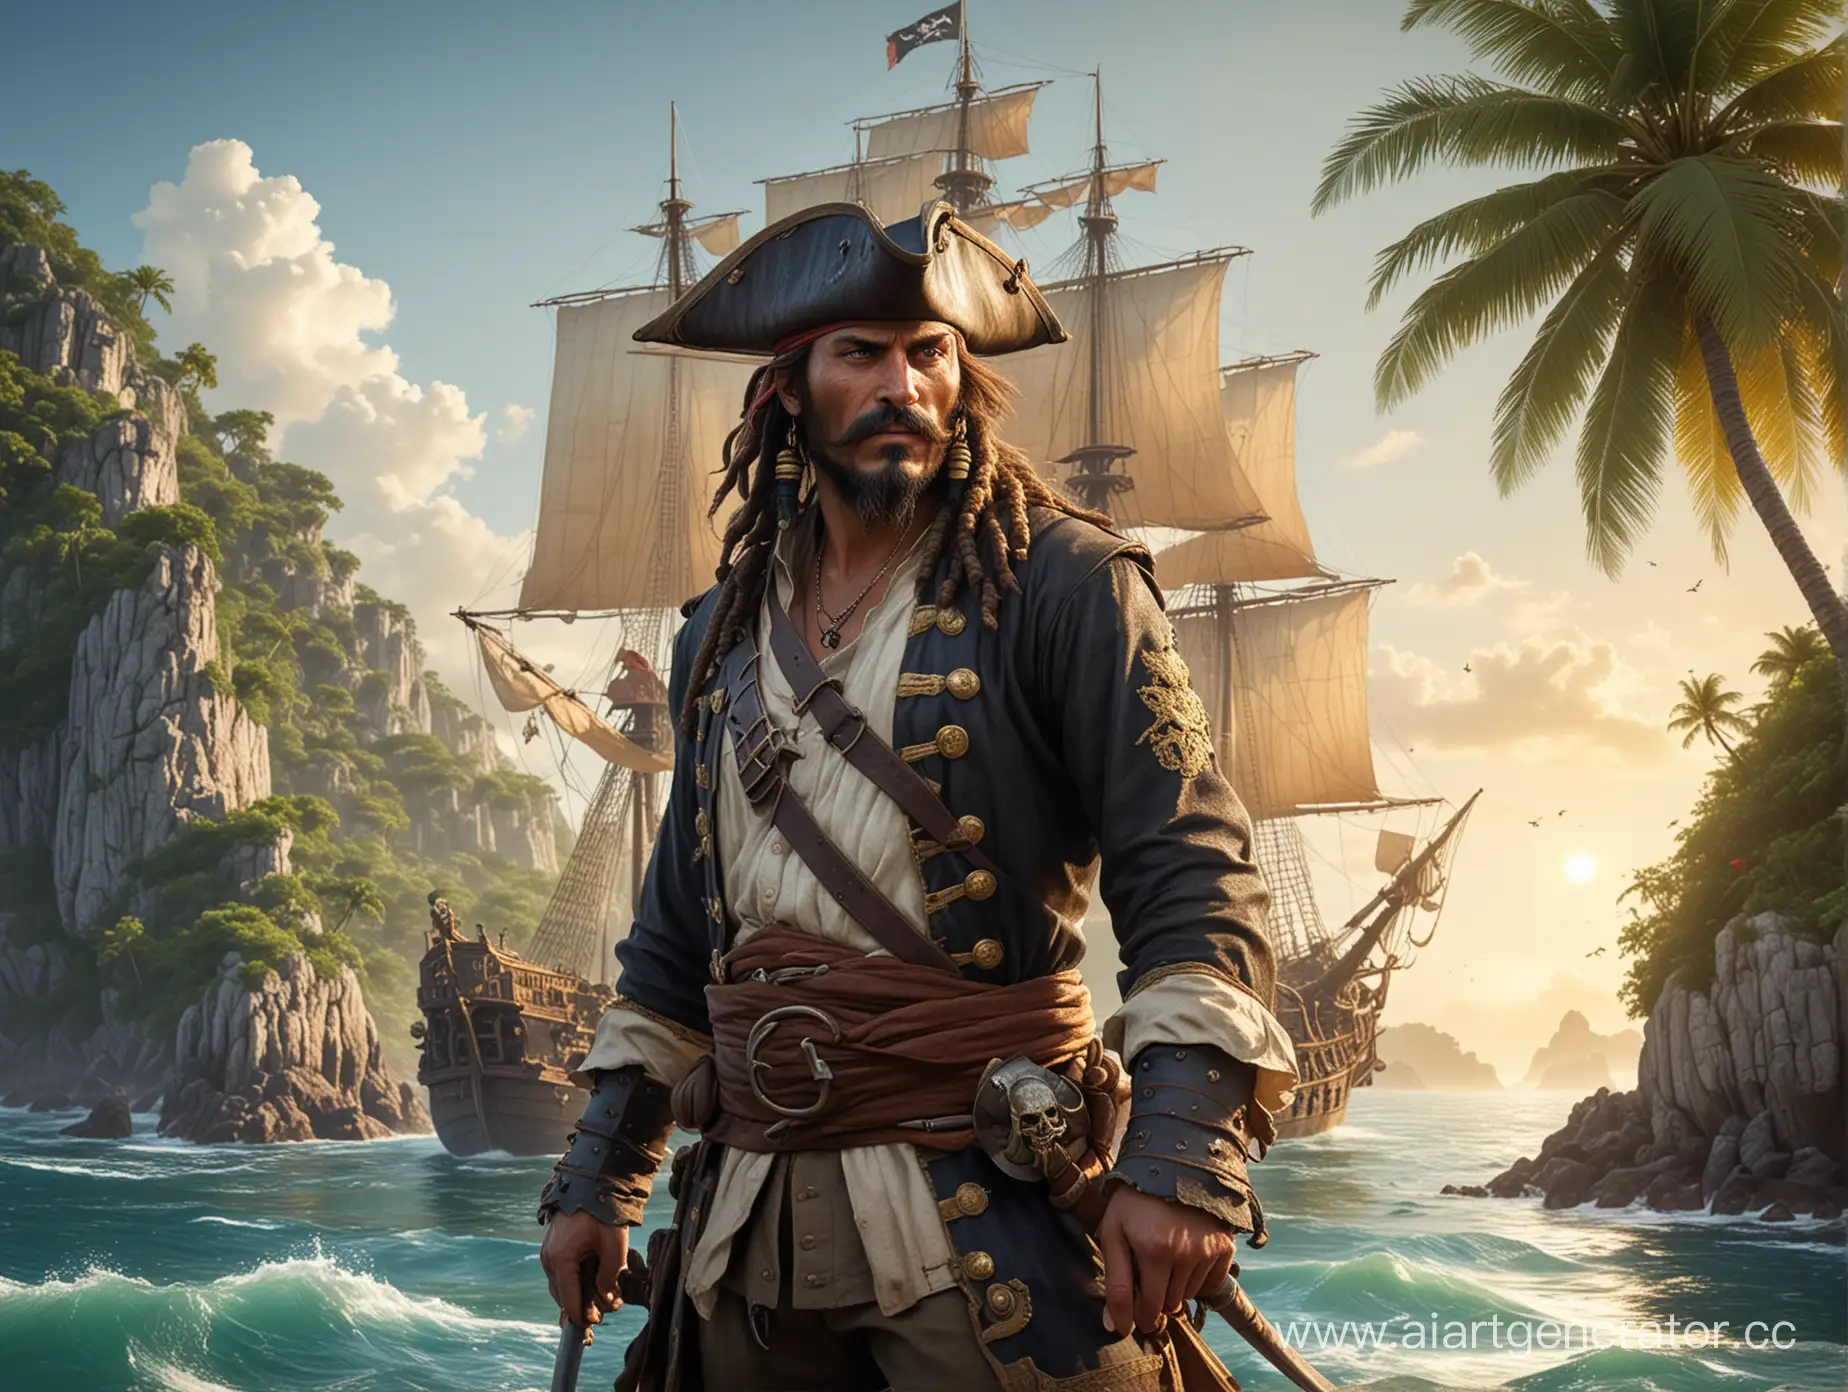 Brave-Captain-Pirate-Yaruga-on-Galleon-PiSun-amidst-Tropical-Islands